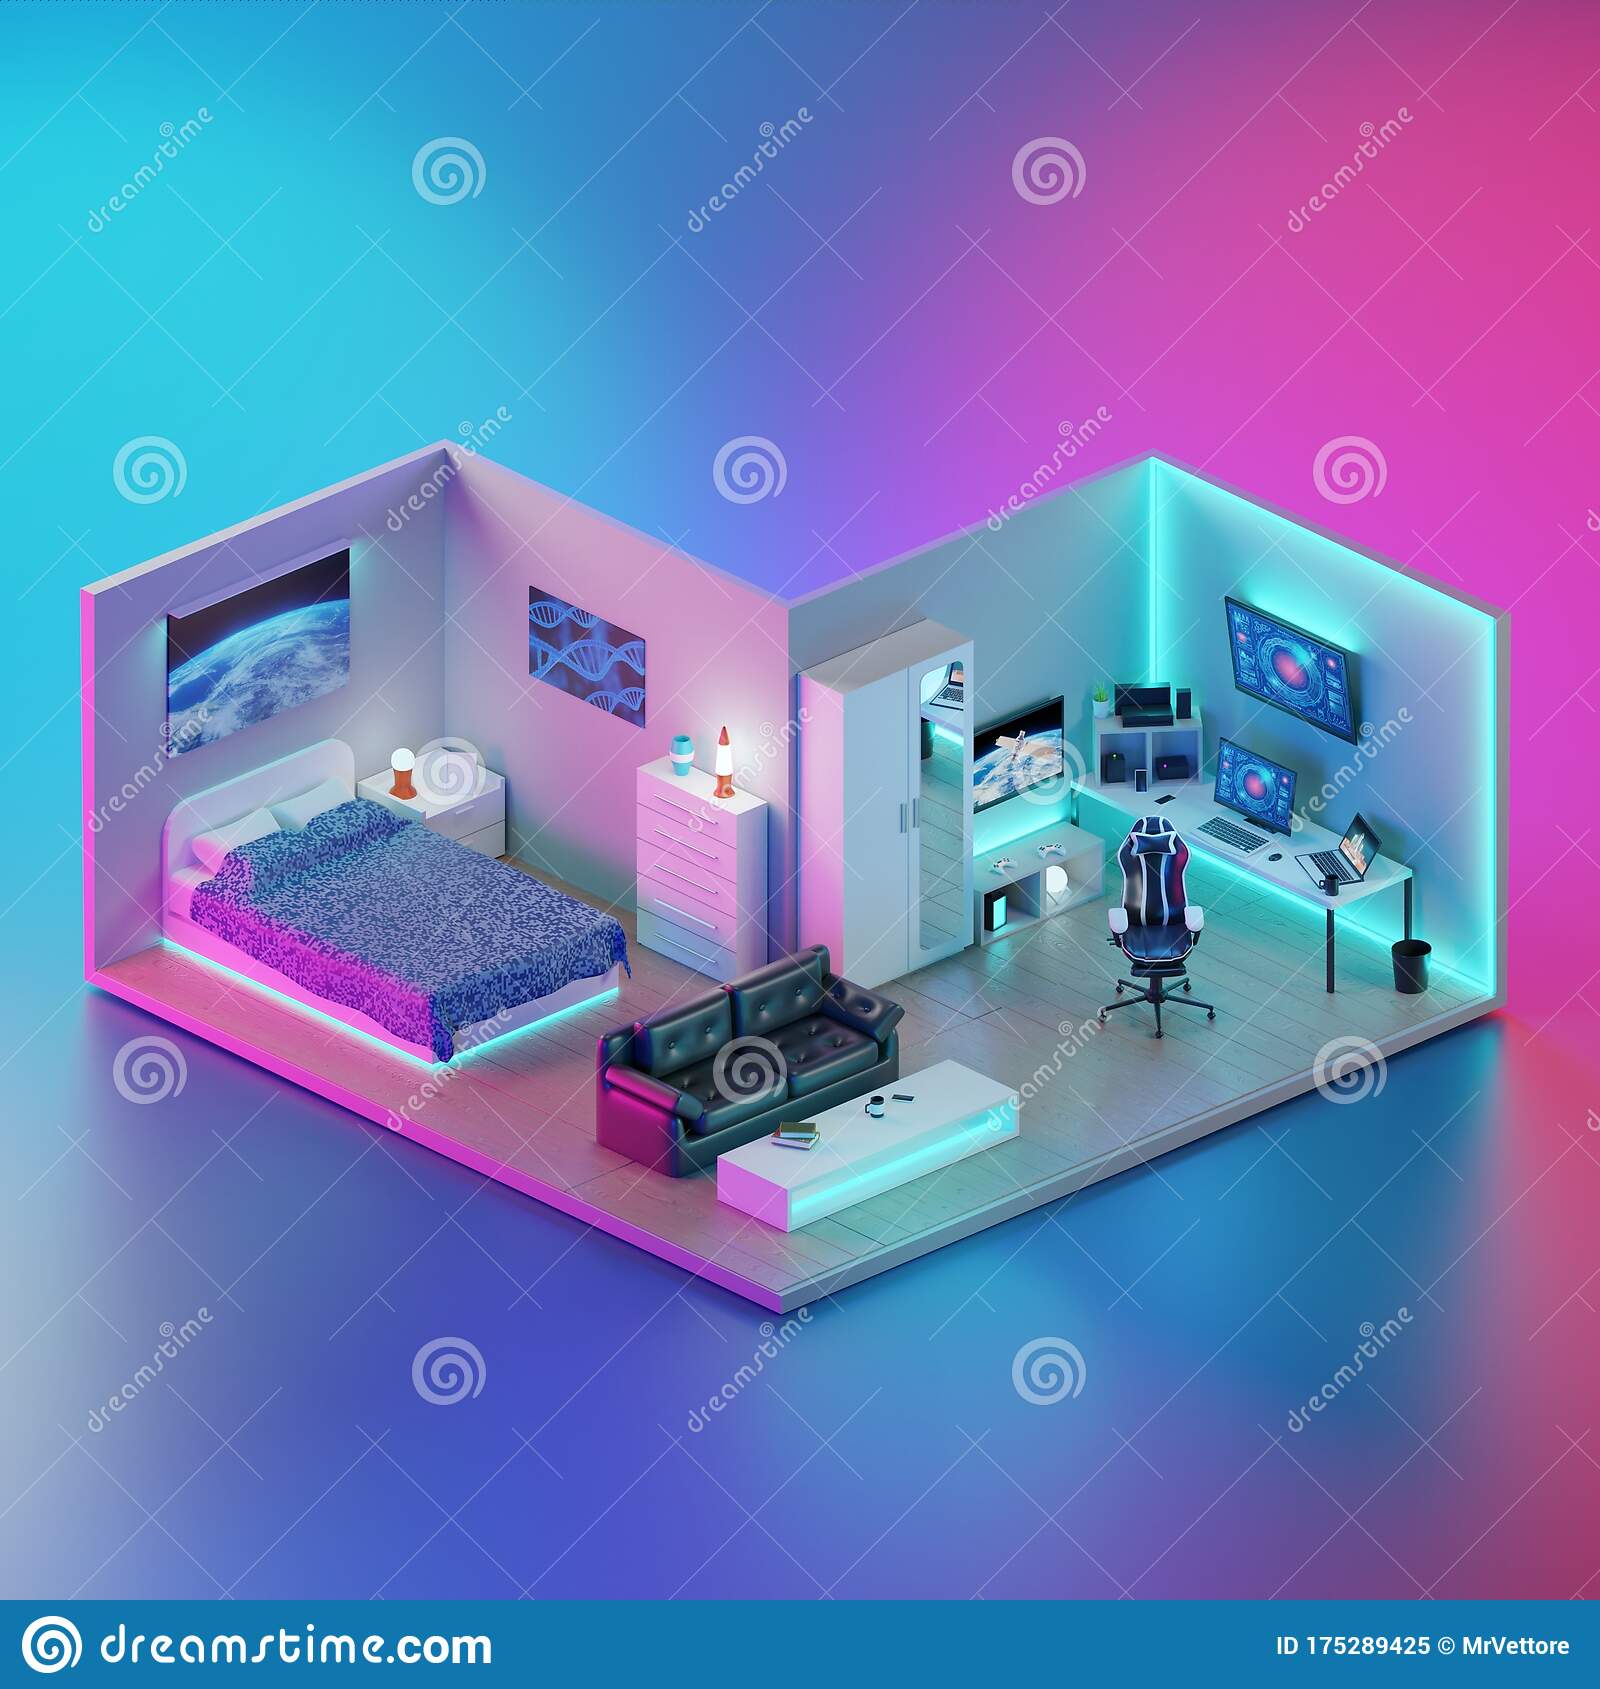 https://en.yeelight.com/wp-content/uploads/sites/4/2022/07/gaming-room-design-interior-gamer-house-neon-light-bedroom-d-illustration-175289425.jpg